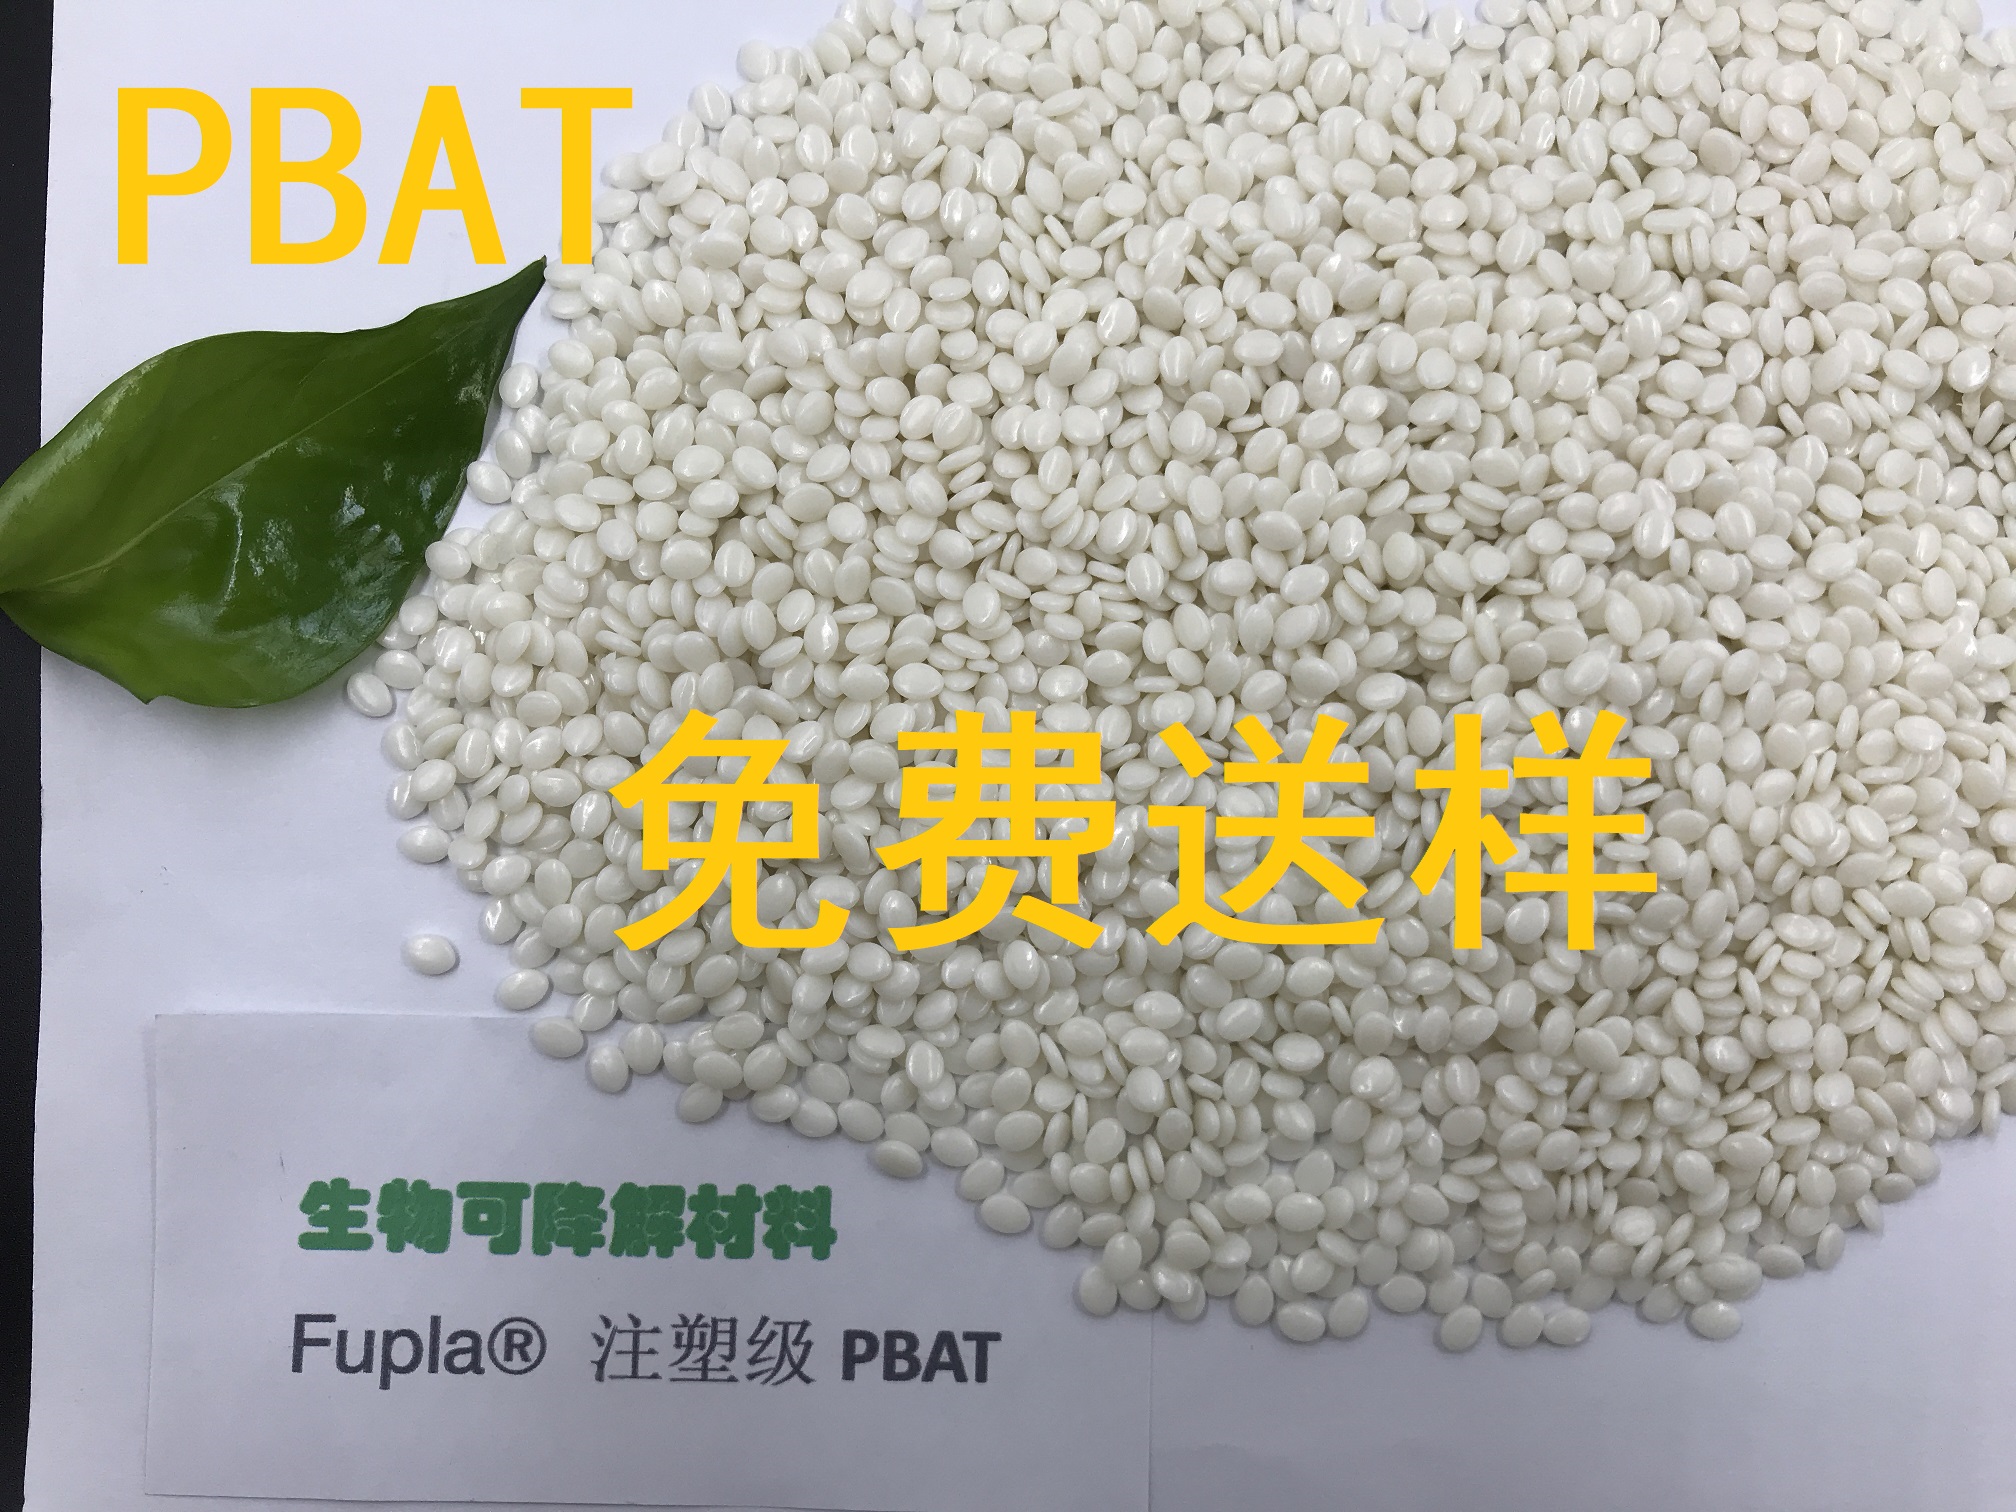 Fupla® L-1220DF 聚己二酸 PBAT+竹纤维 高强度 高硬度 耐热级PBAT 生物降解材料